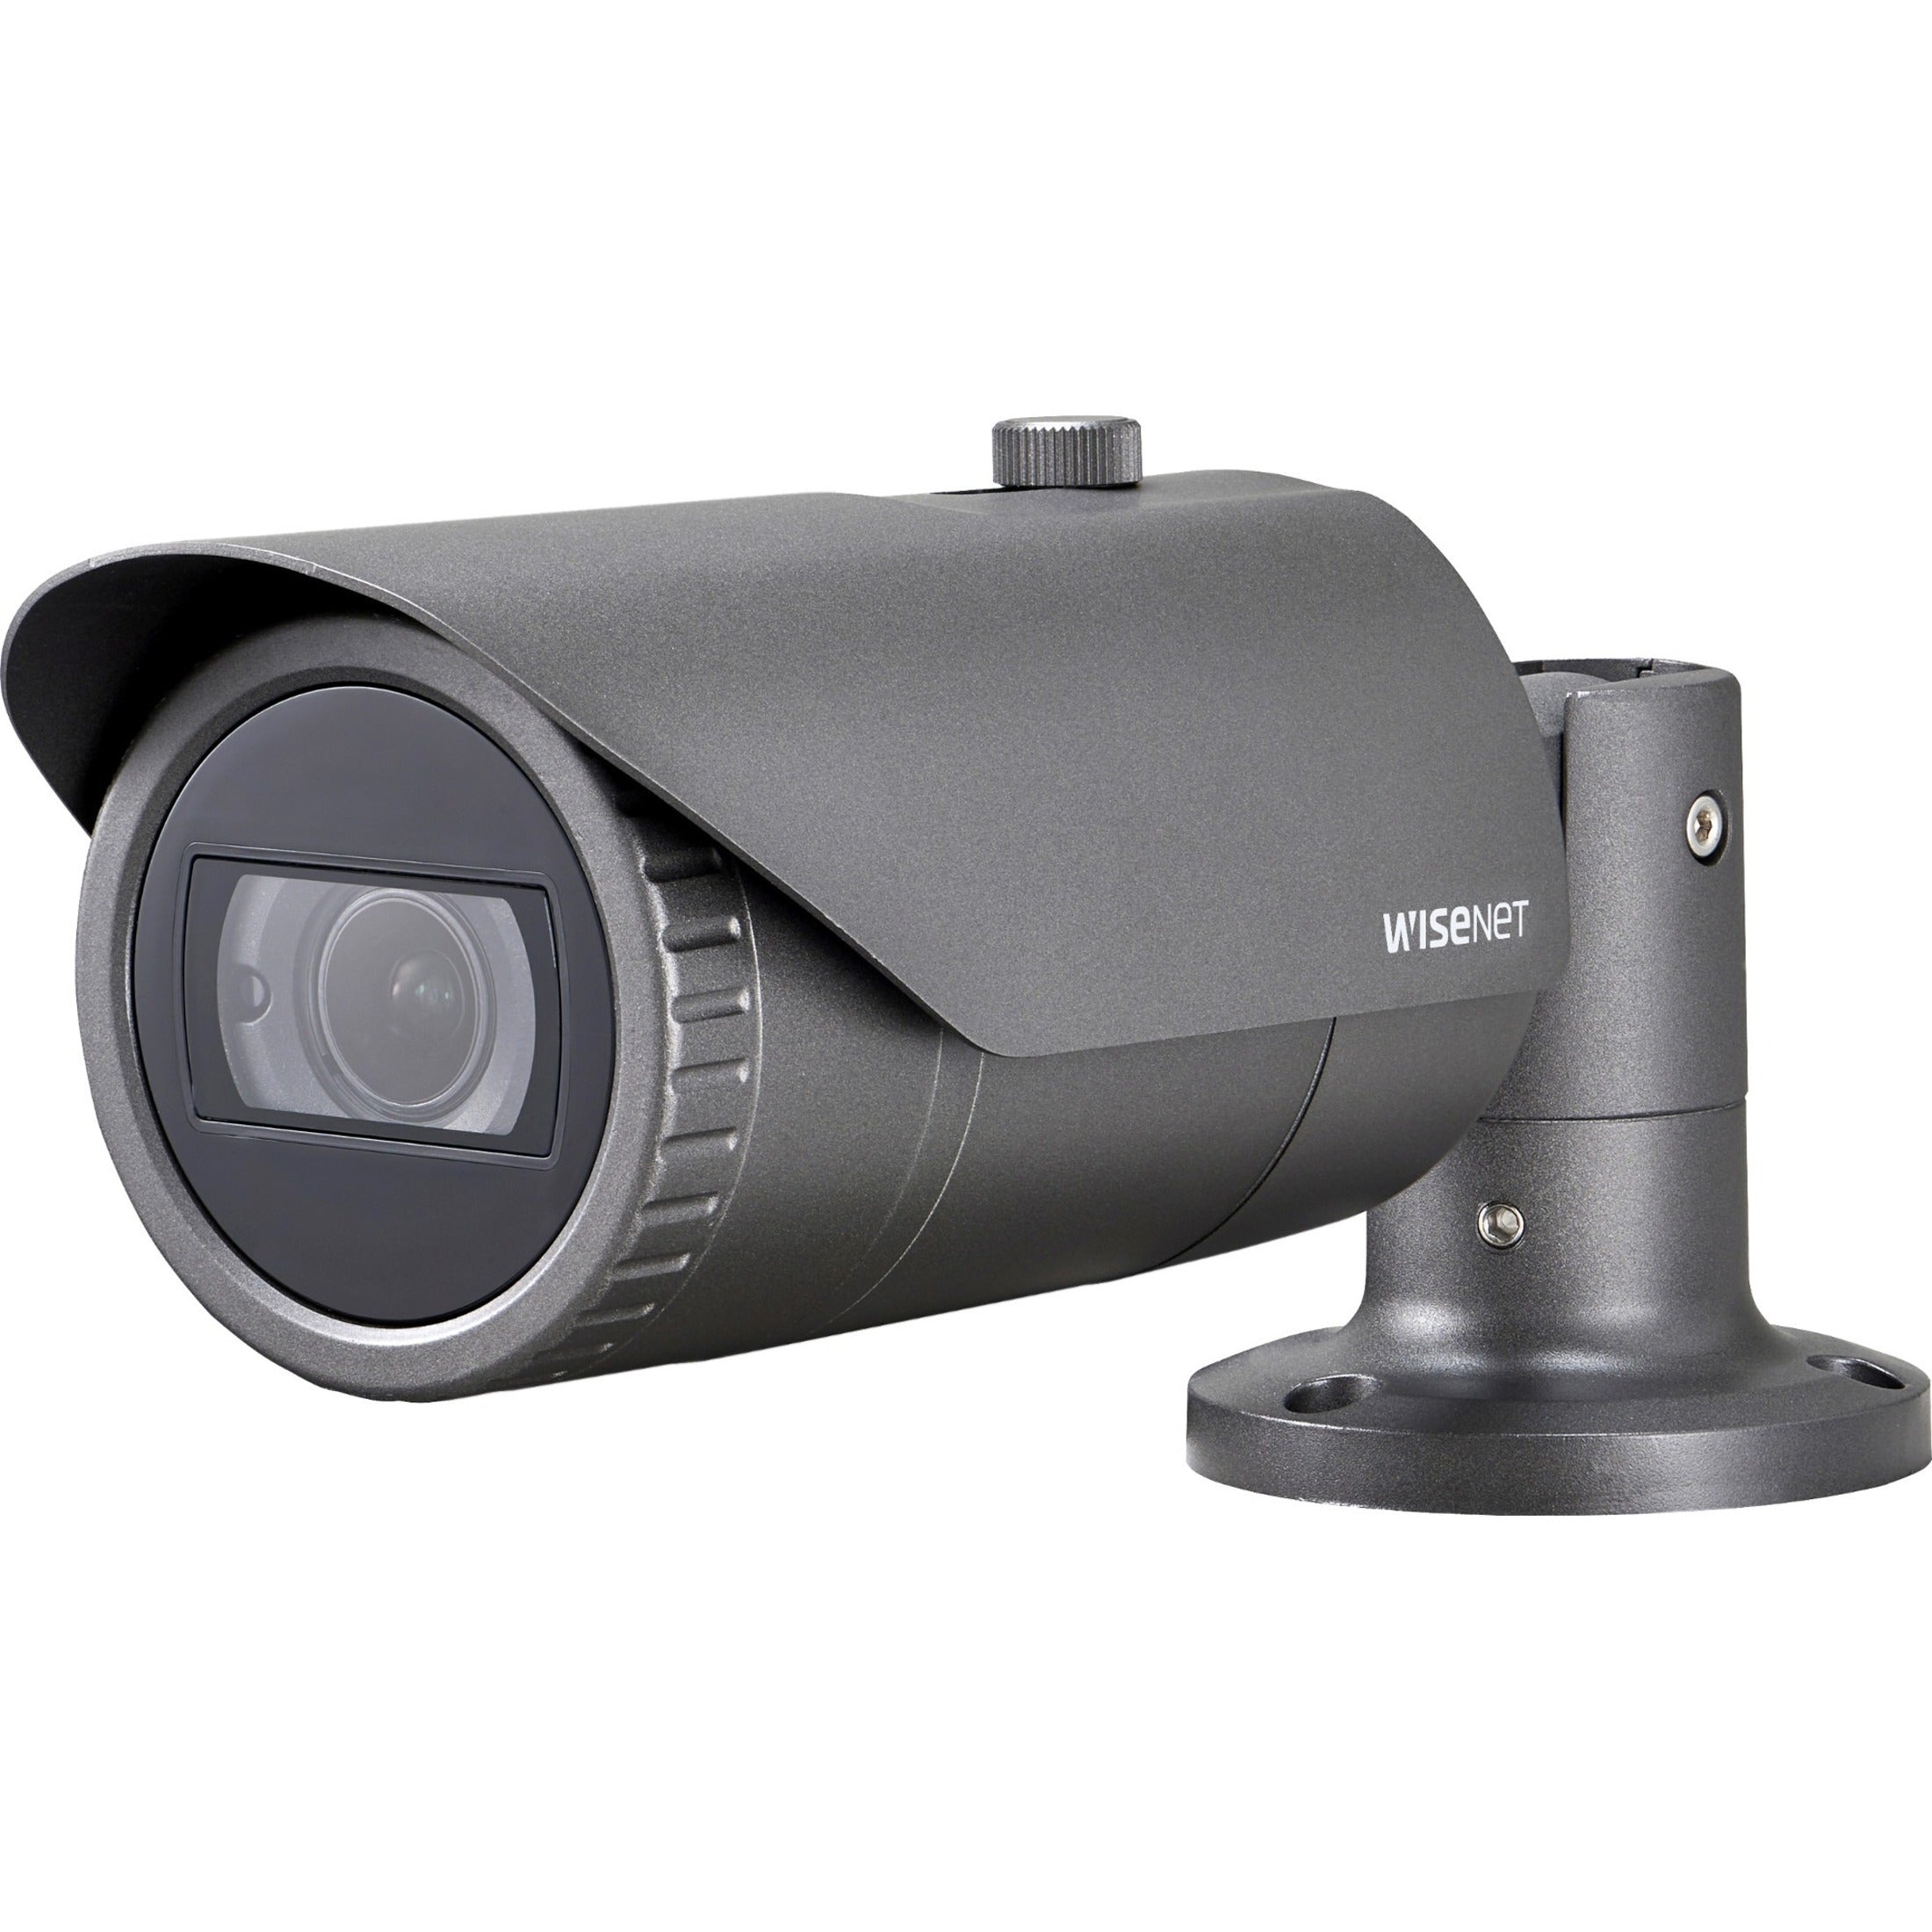 Wisenet HCO-6080R 2MP Analog HD IR Bullet Surveillance Camera, Full HD1080P30FPS, Varifocal Lens, 3.1x Optical Zoom, Privacy Masking, Motion Detection, IP66 Ingress Protection